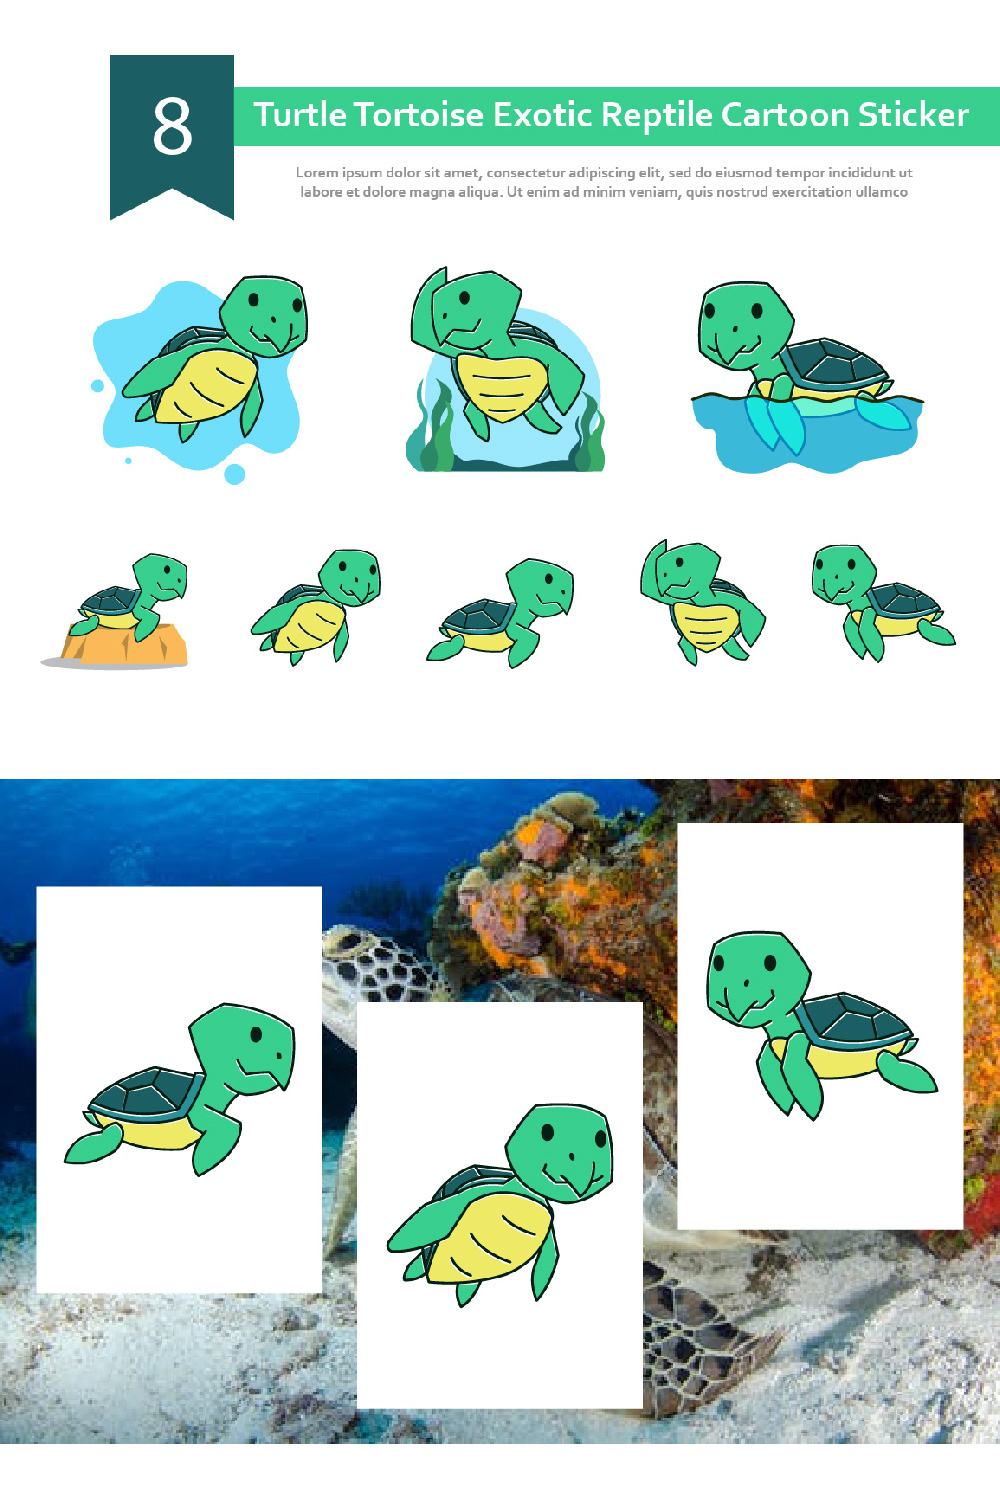 Turtle Tortoise Exotic Reptile Cartoon Sticker pinterest.